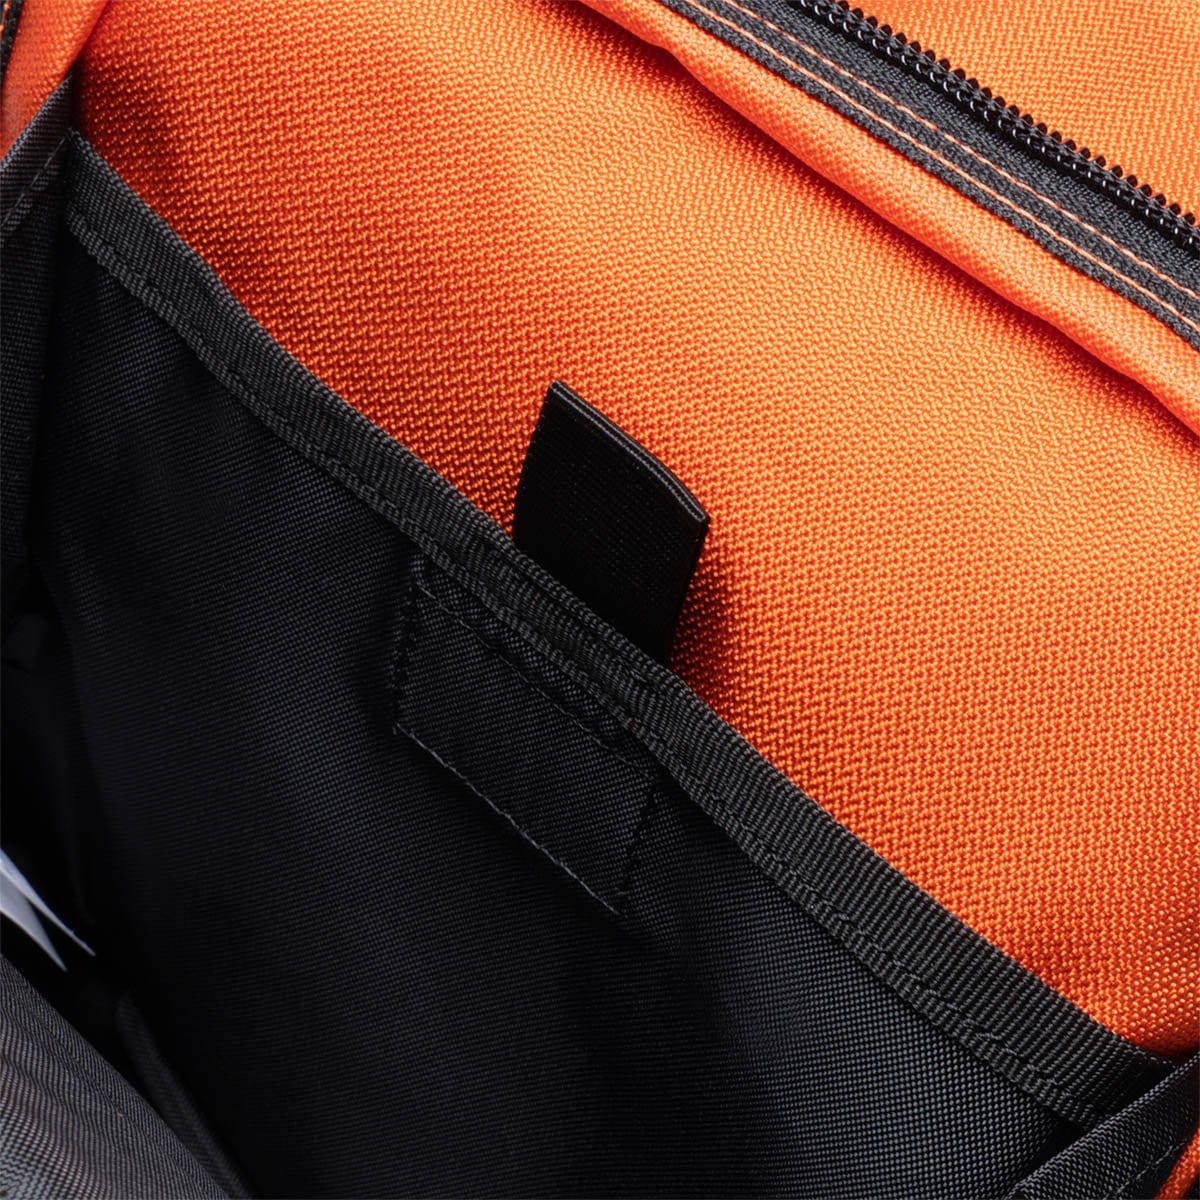 Urban Backpack Carhartt WIP Delta Backpack